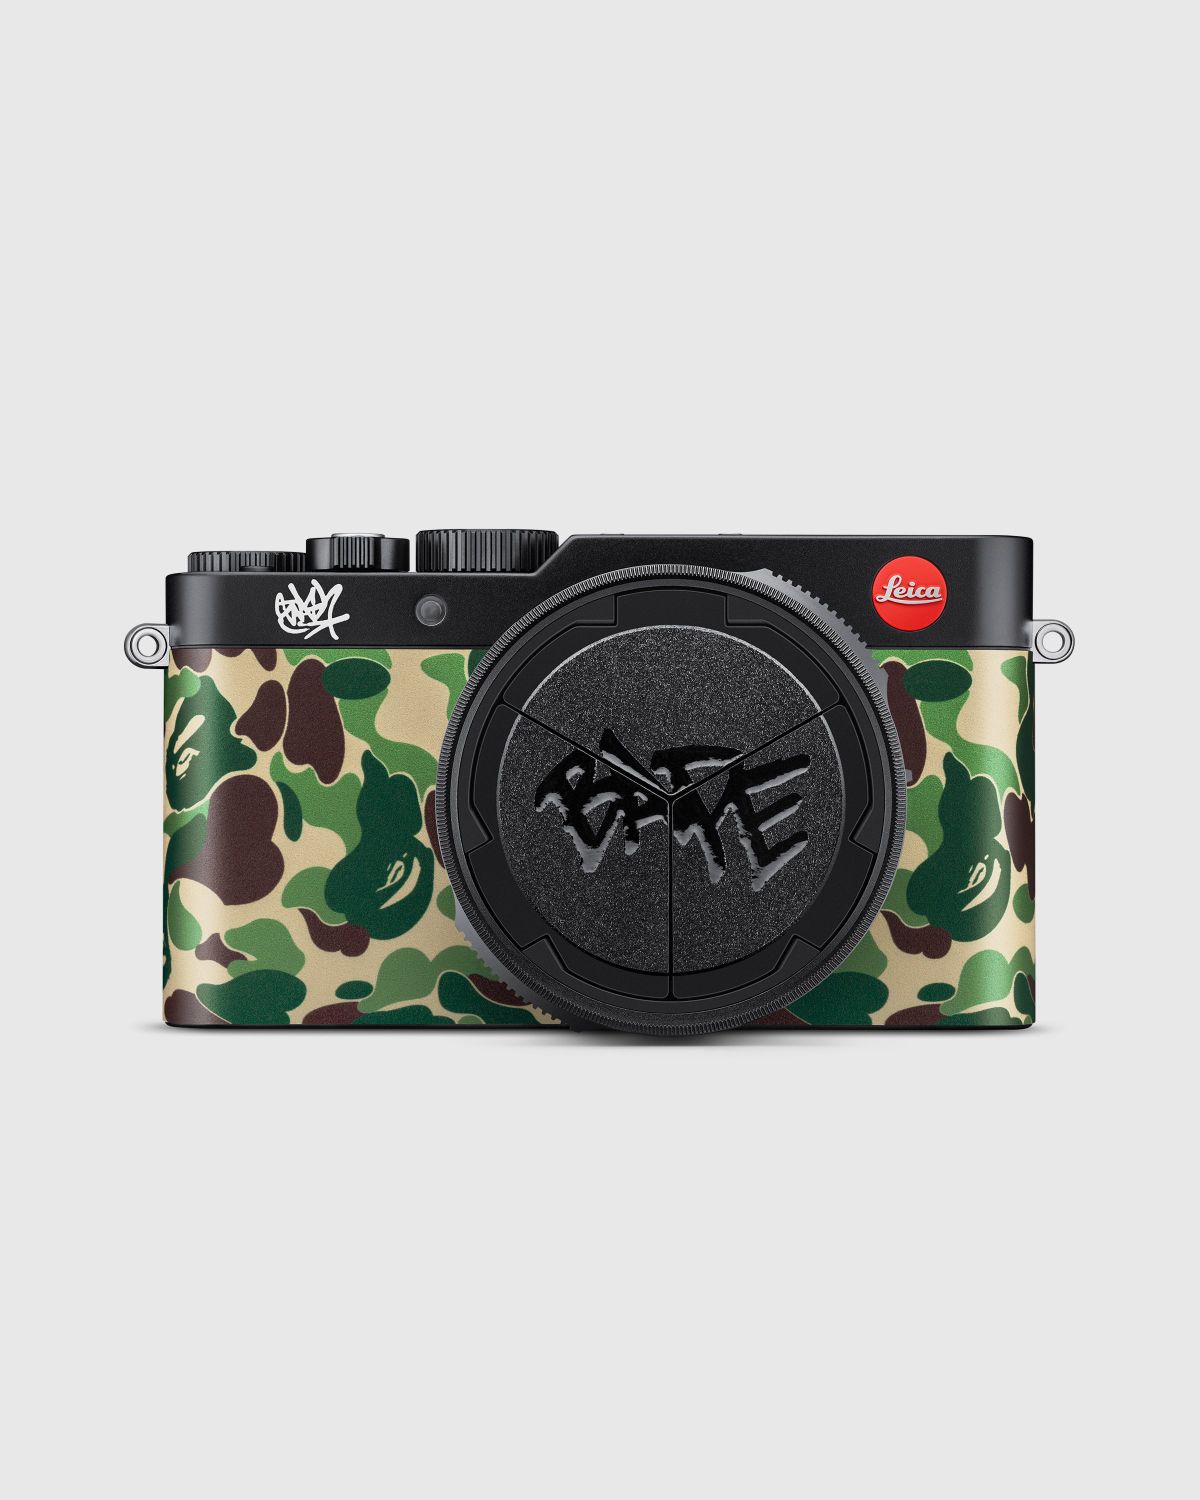 Leica – D-Lux 7 “A BATHING APE® x STASH” Edition Black - Lifestyle - Multi - Image 1